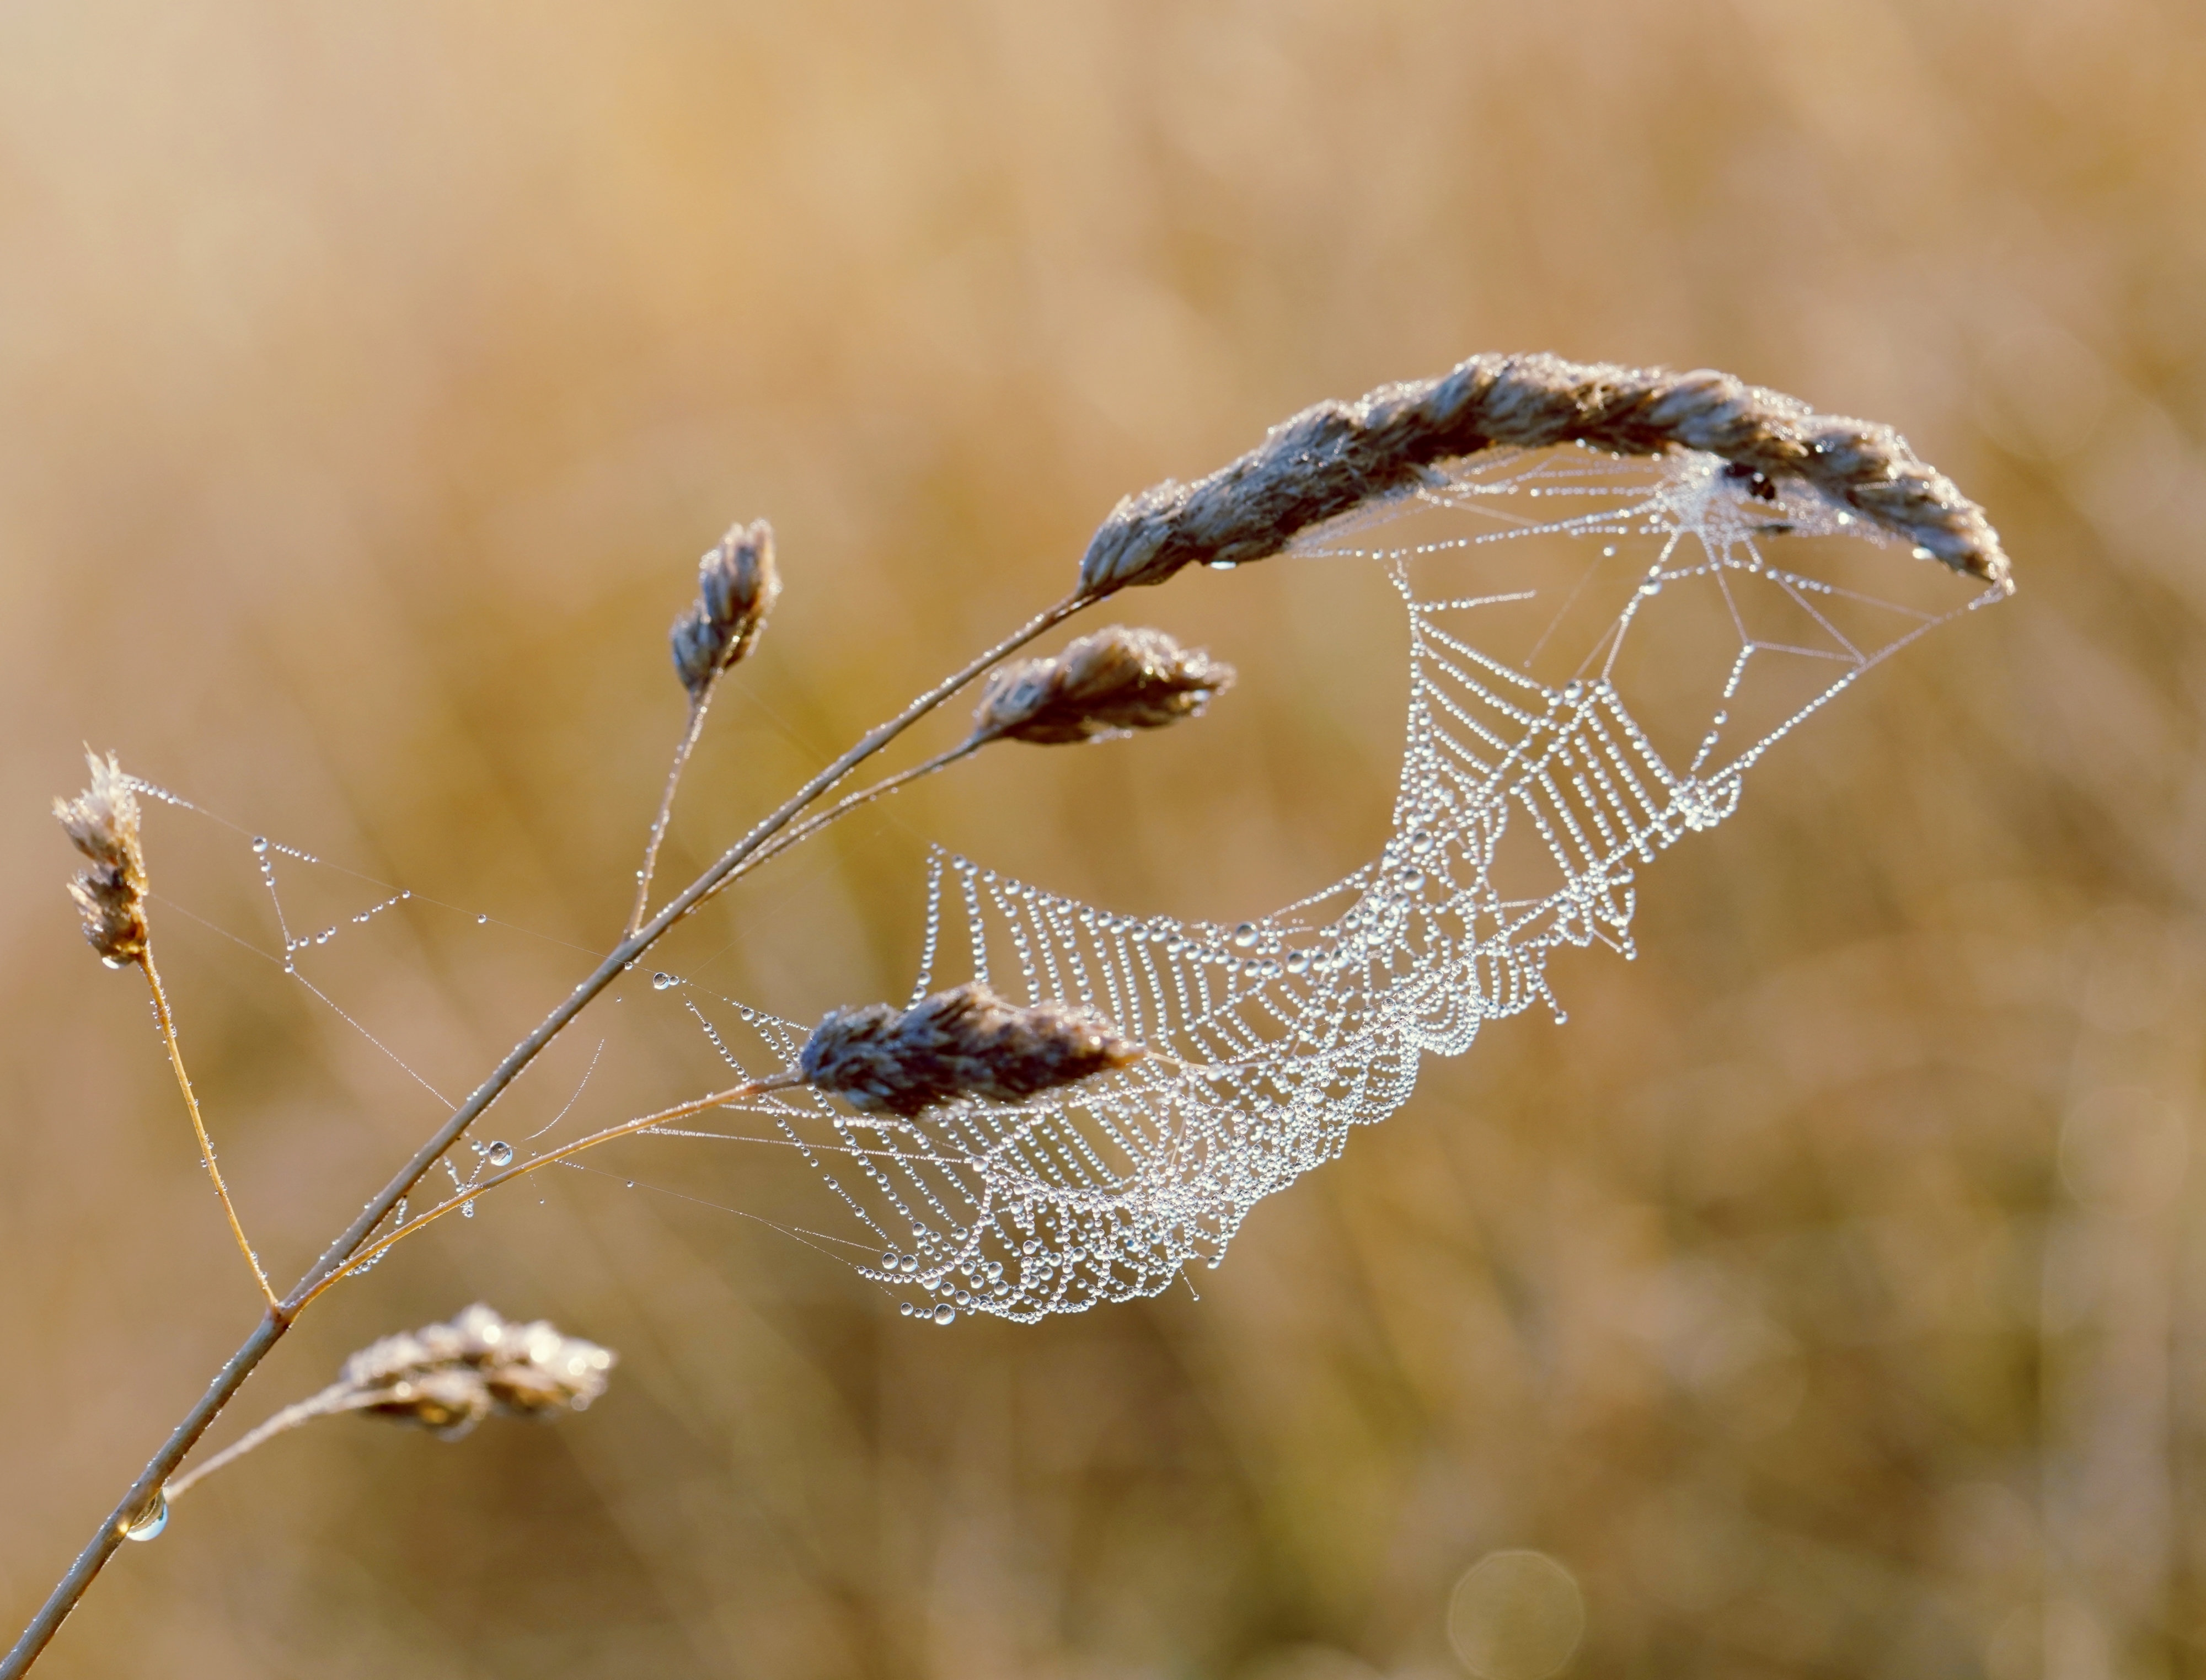 Dew-covered cobweb on grass